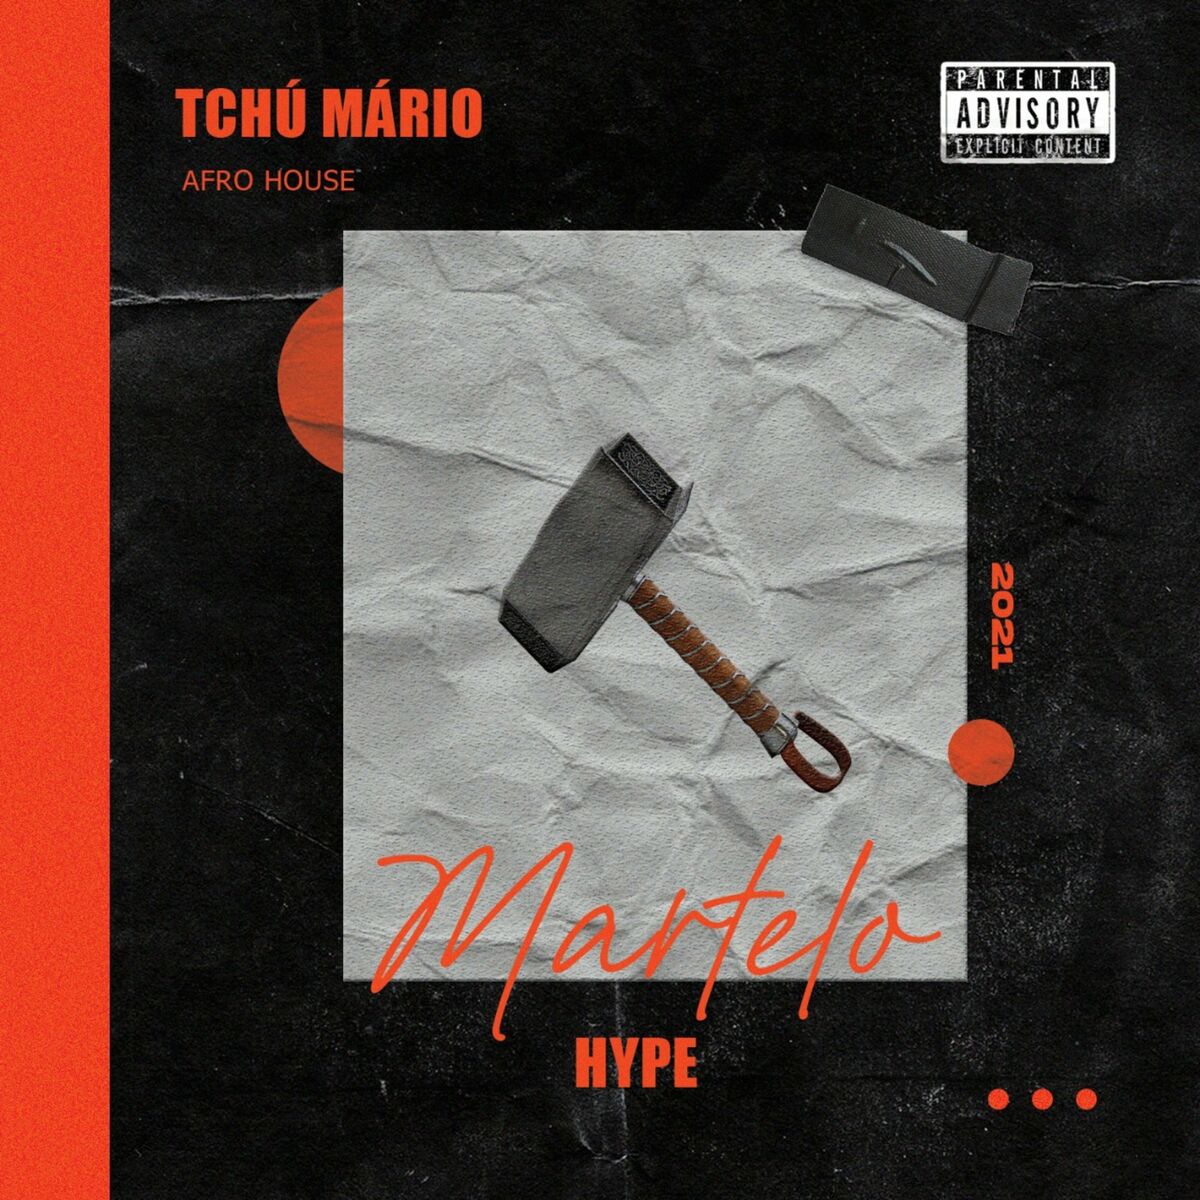 Tchu Mario Wanga – Martelo (O Hype)